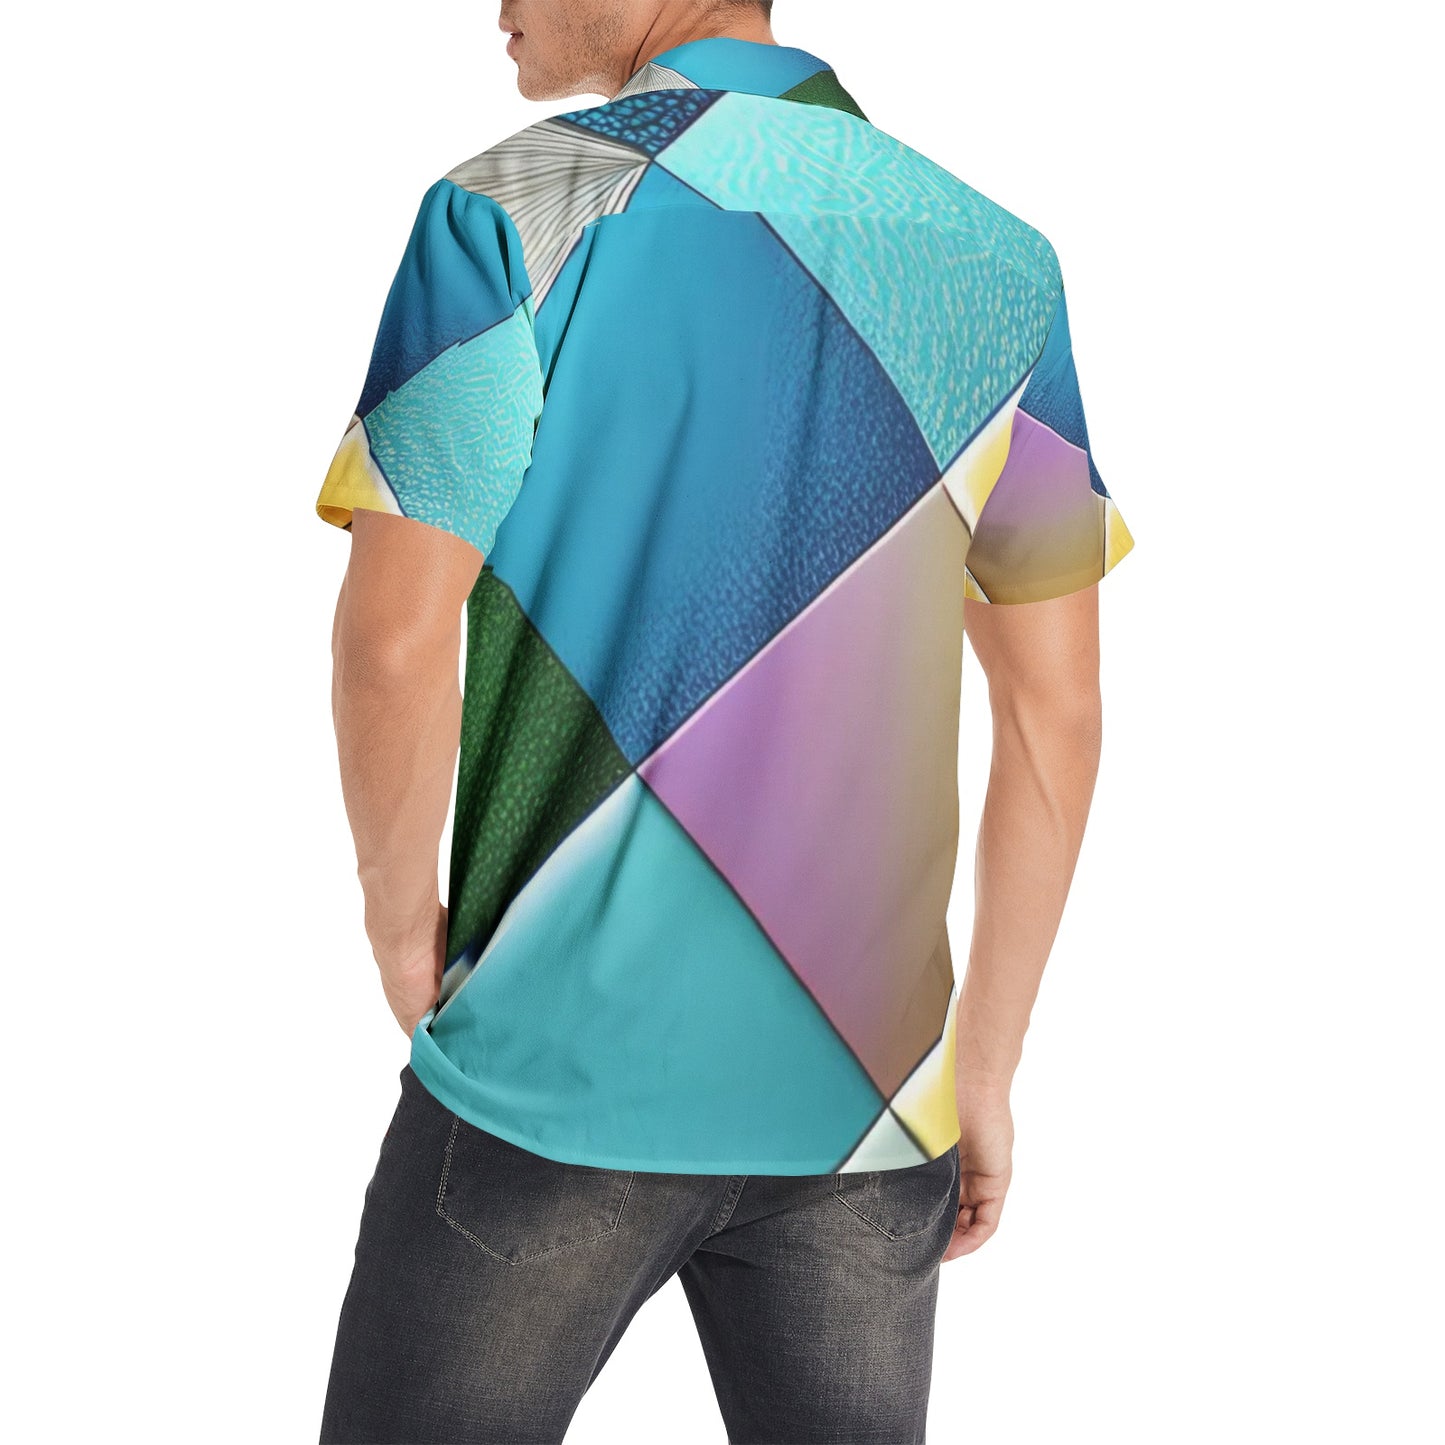 Men's All-over print Short Sleeve Shirts shons fabric